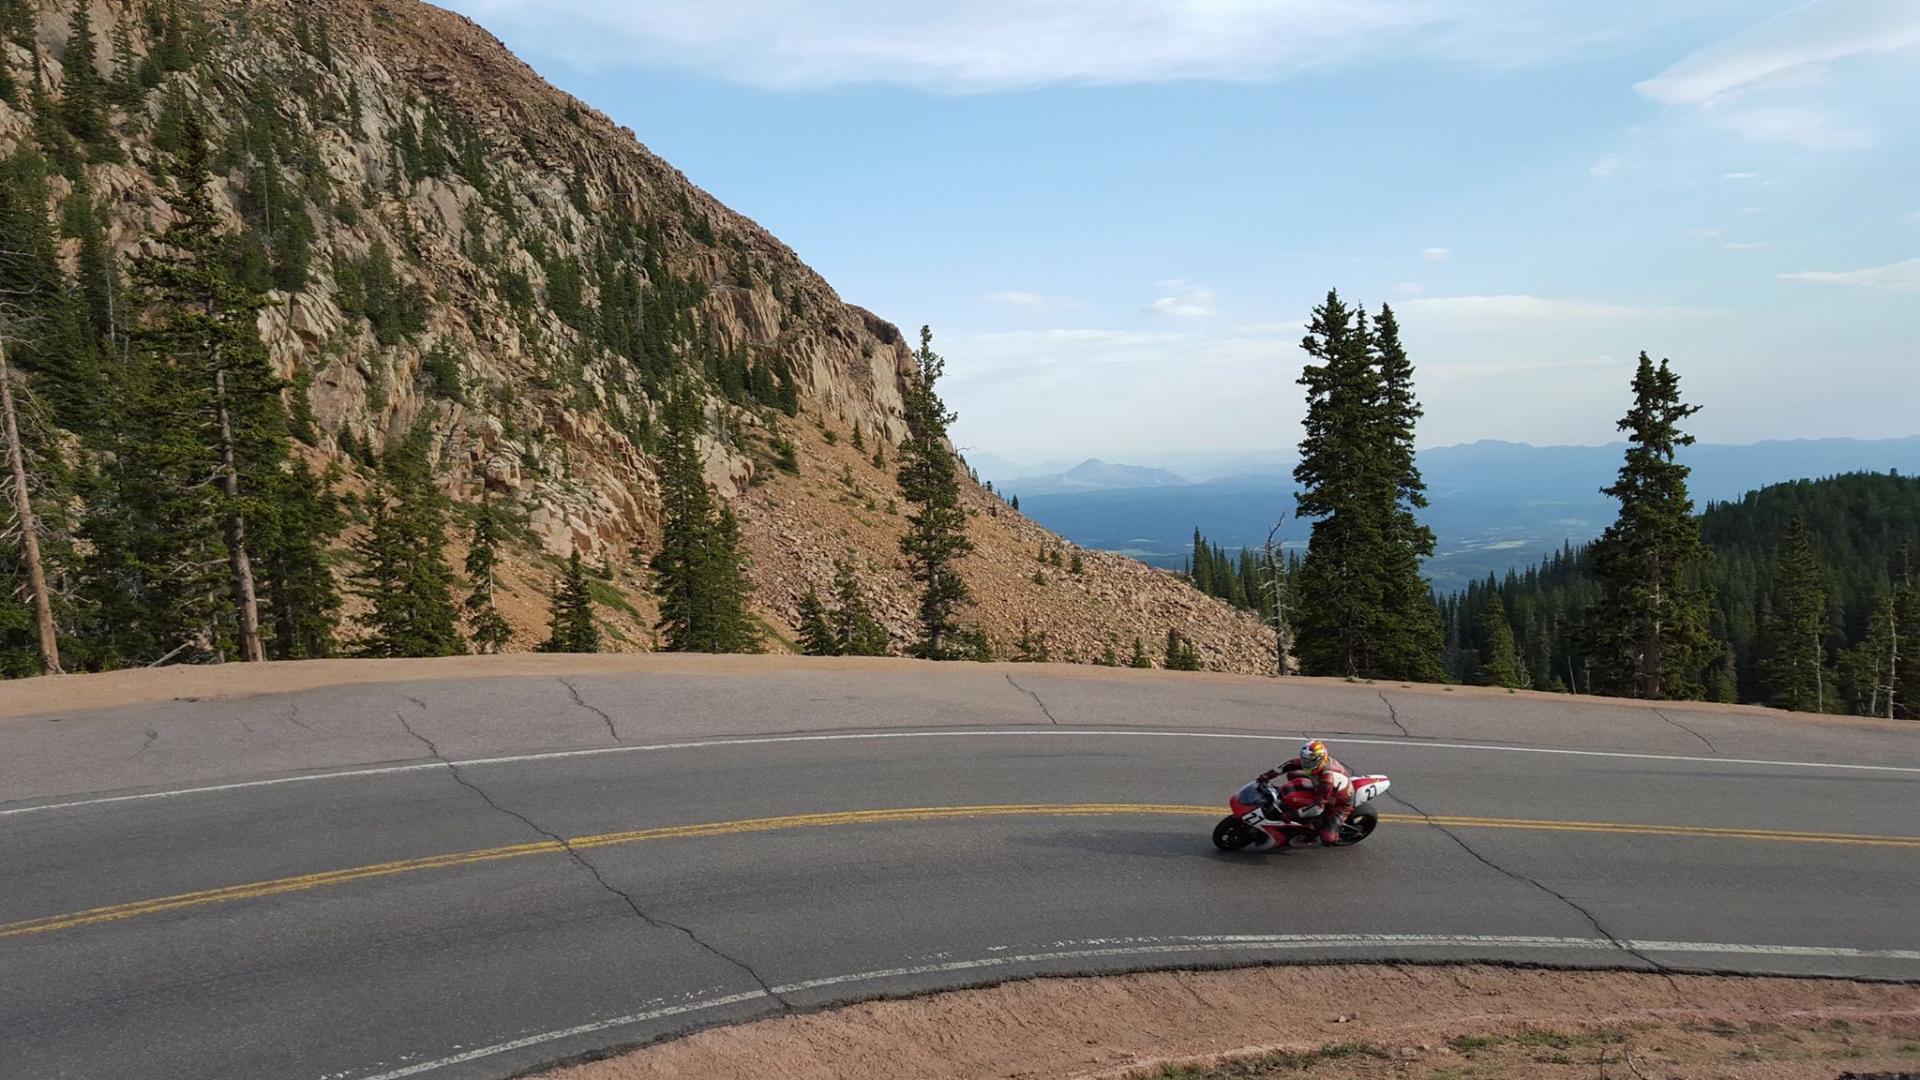 Buckeye Current tackles Pikes Peak with Kvaser Memorator Pro on-board